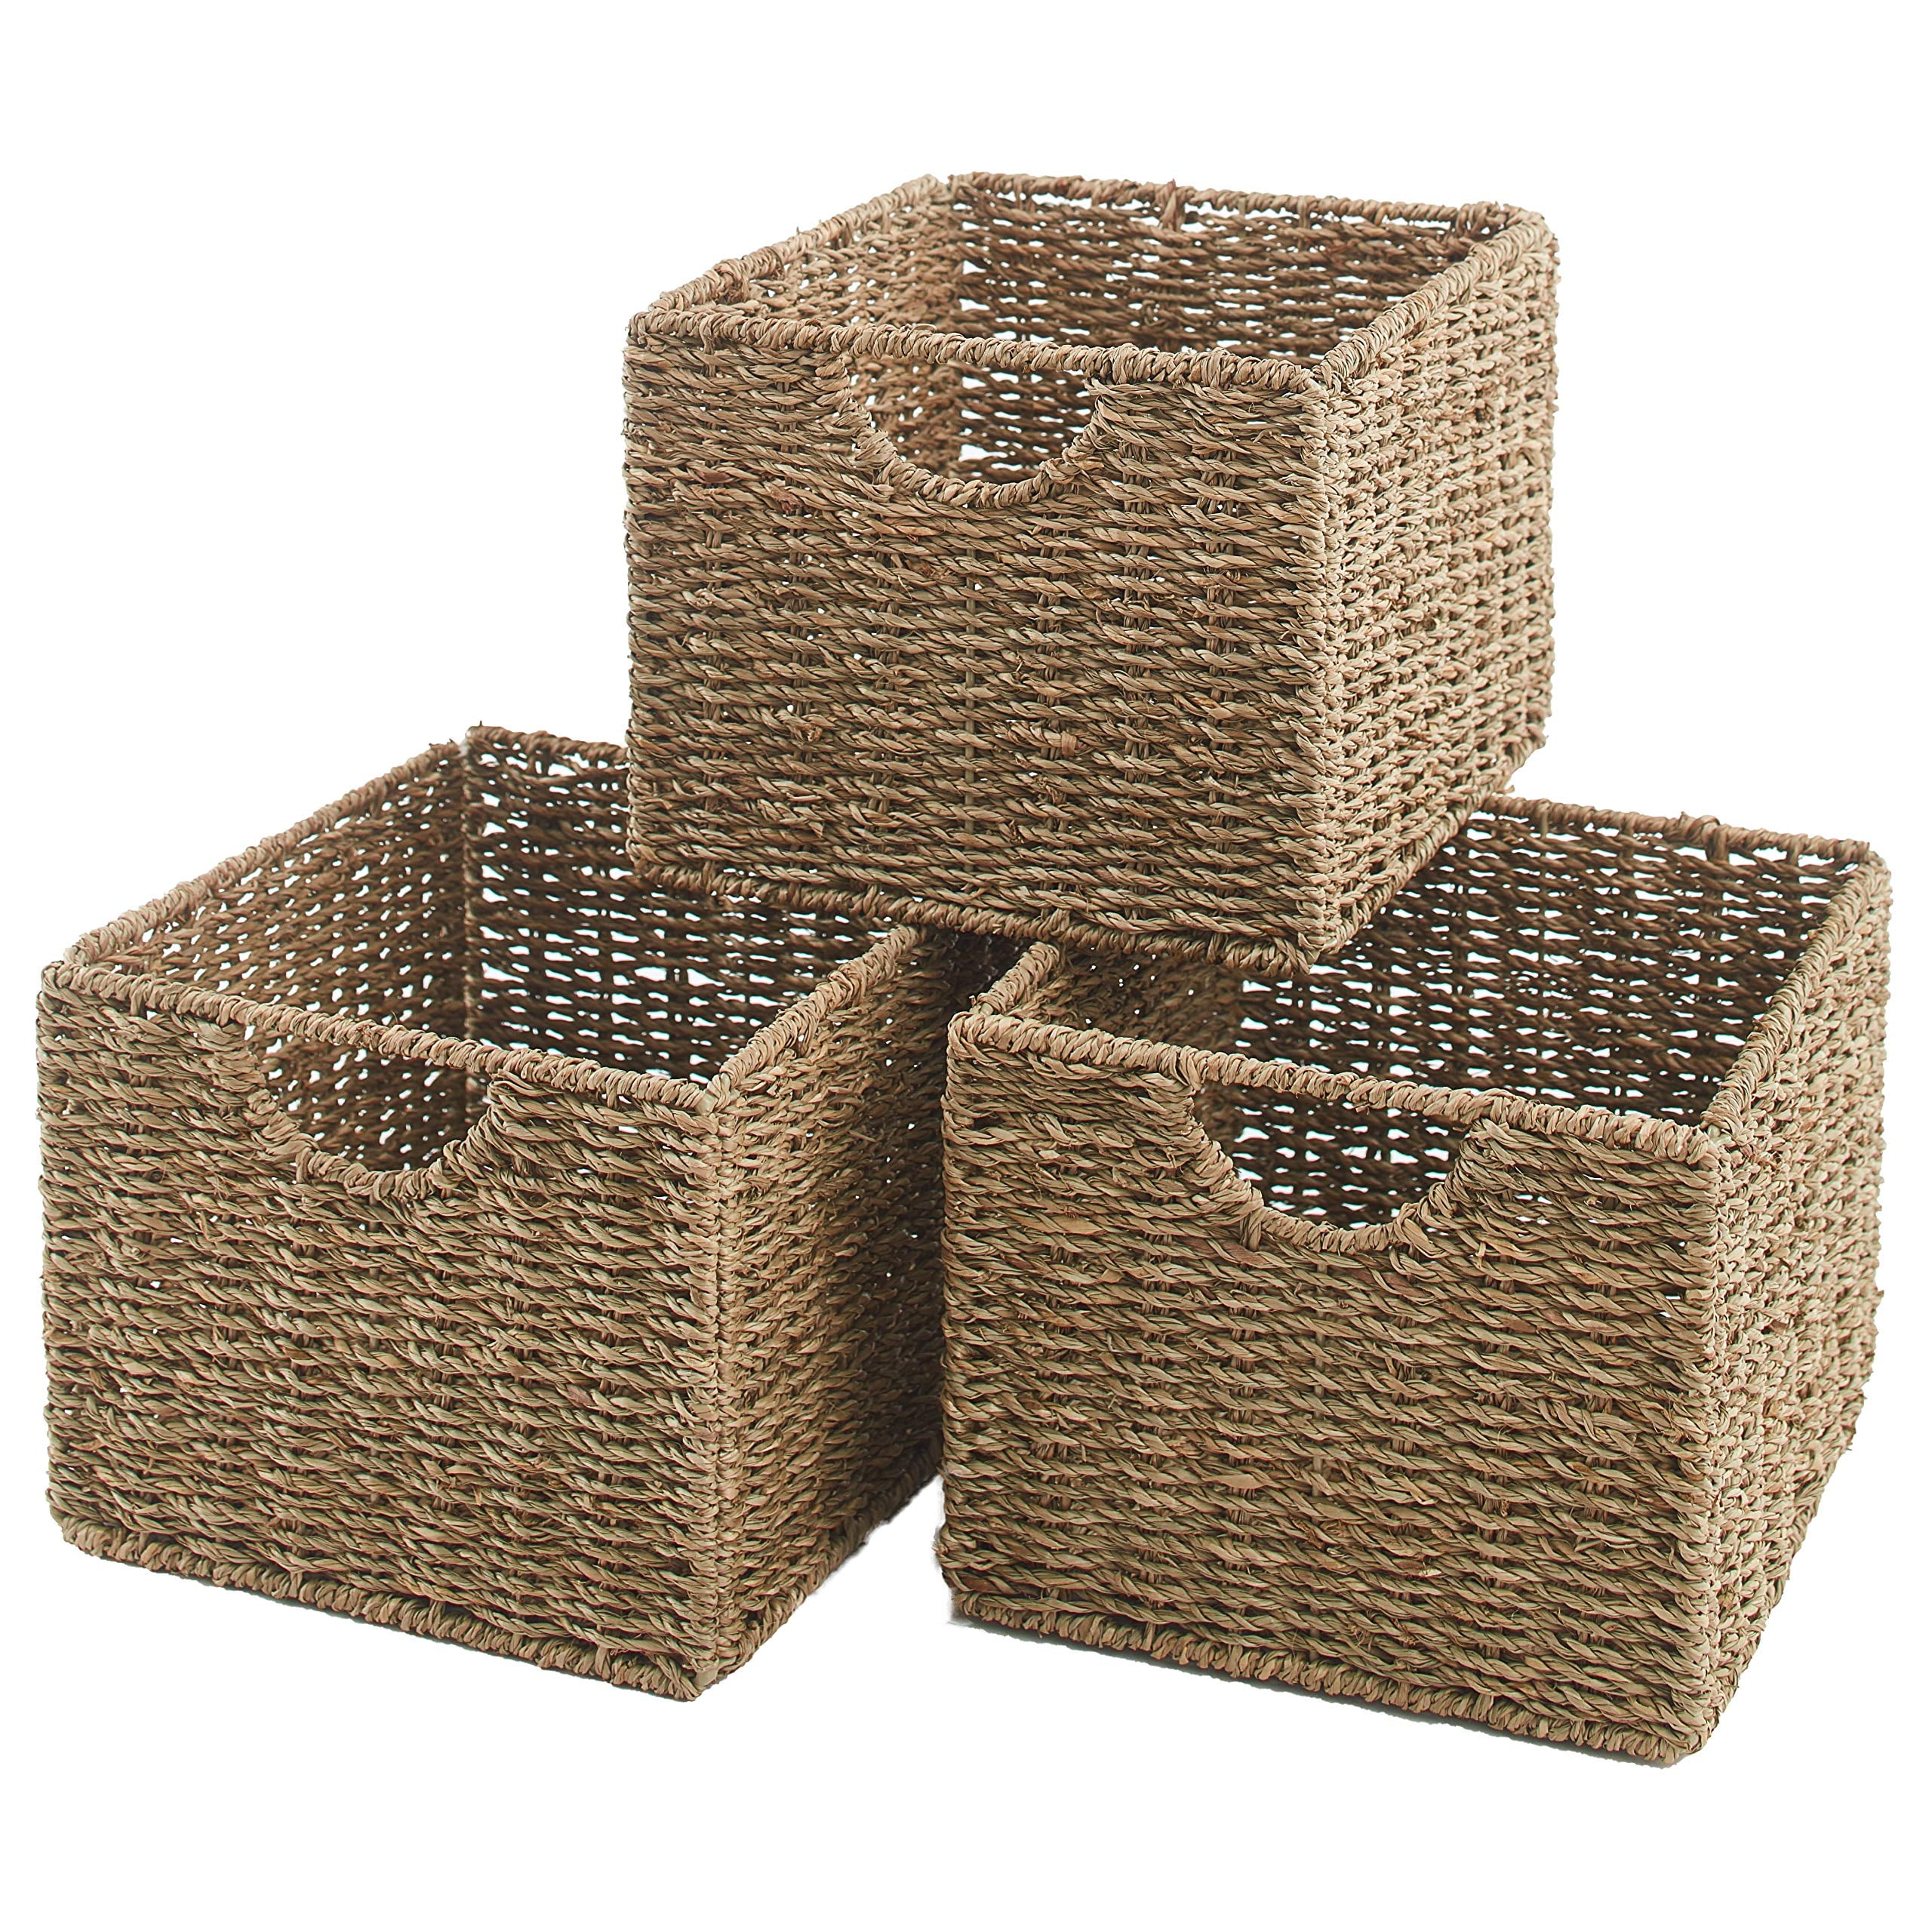 CubesLand Woven Basket for Shelves,Clothes Closet Storage Baskets